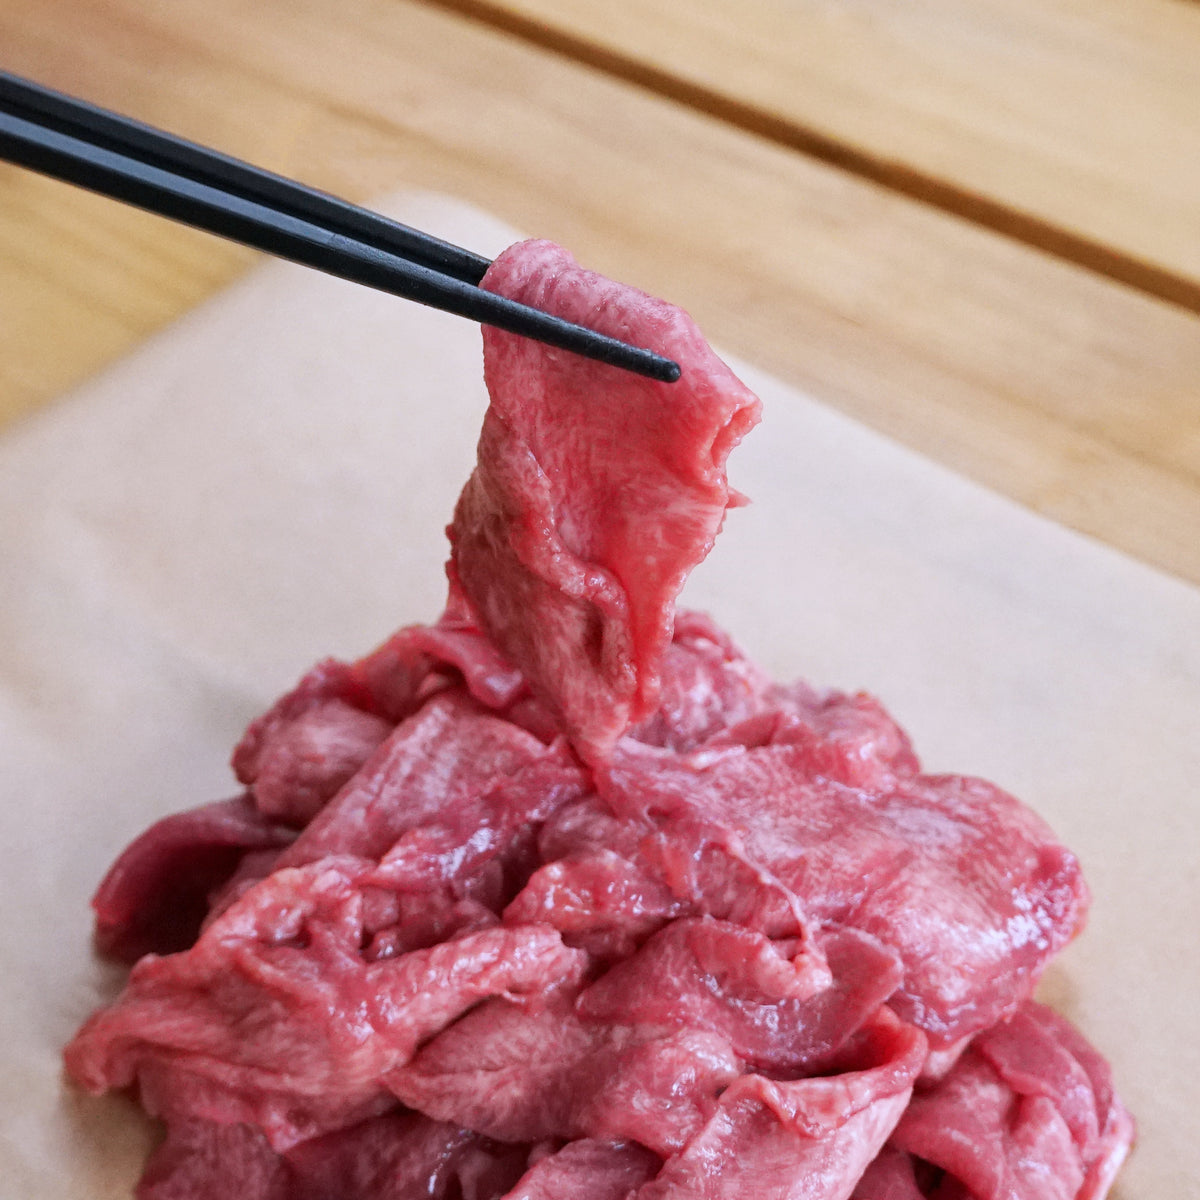 Free-Range Beef Tongue Slices B-Grade (300g) - Horizon Farms